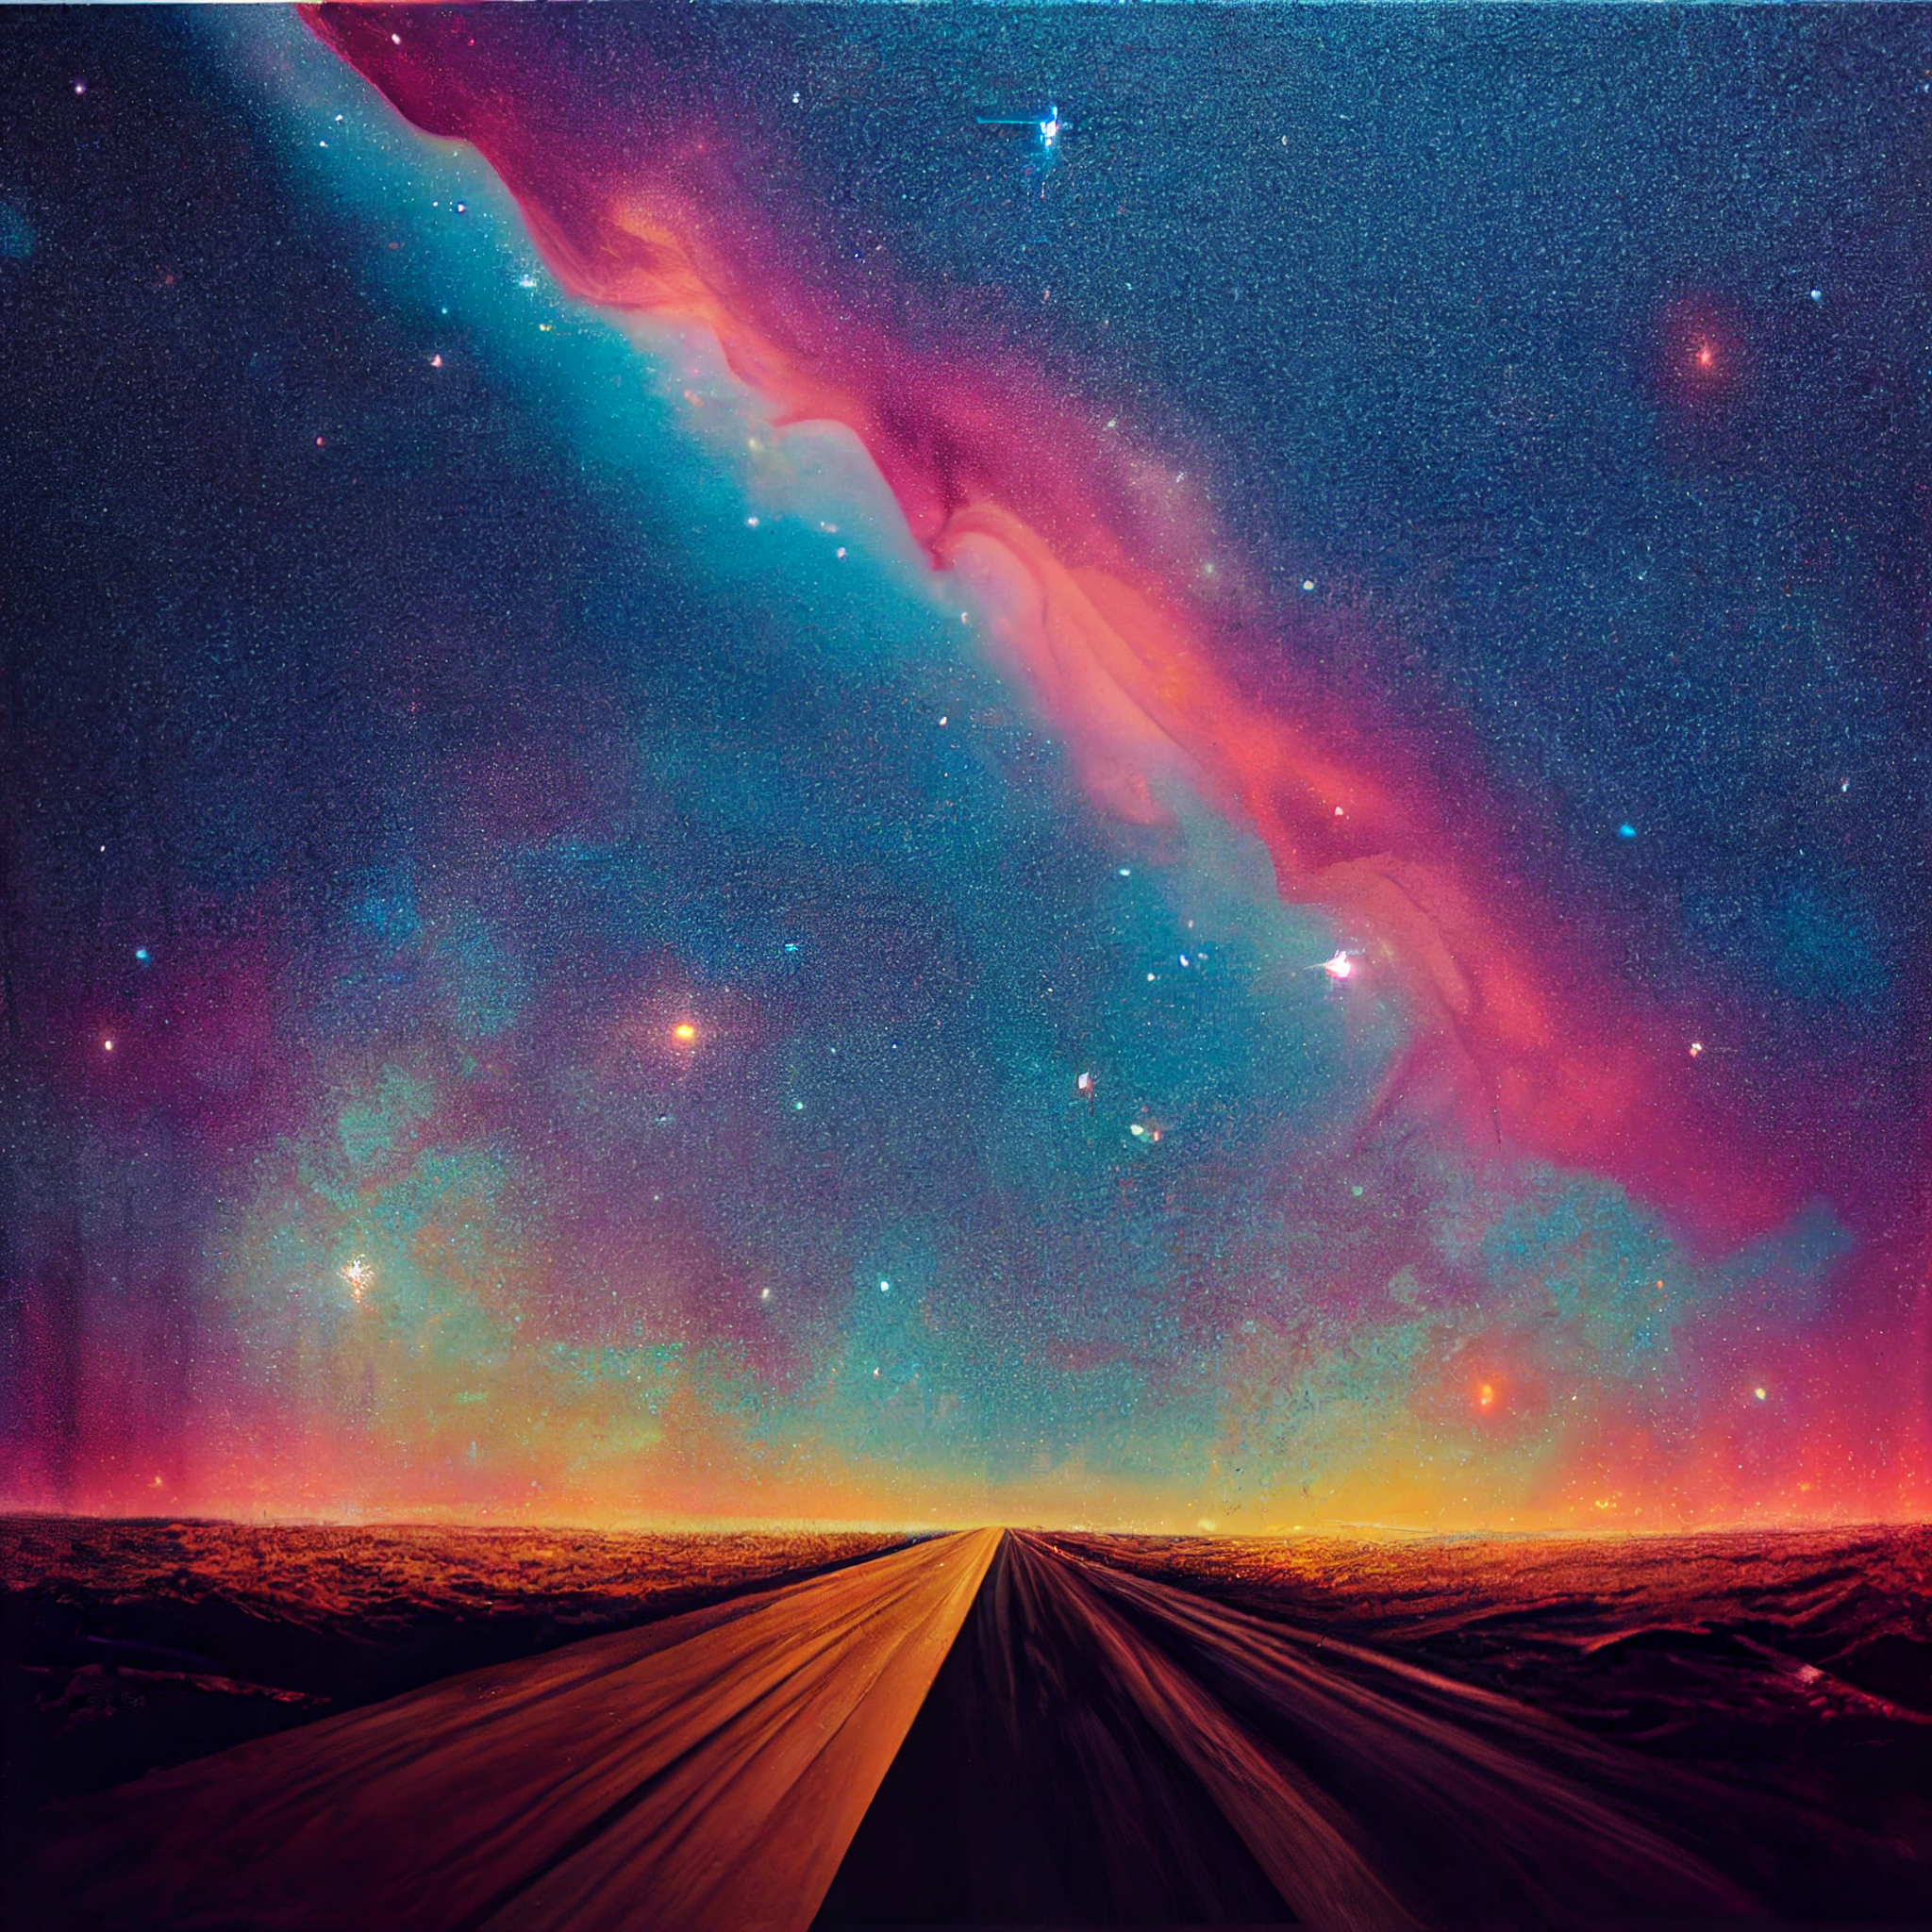 Dying somewhere we were stars – desert road